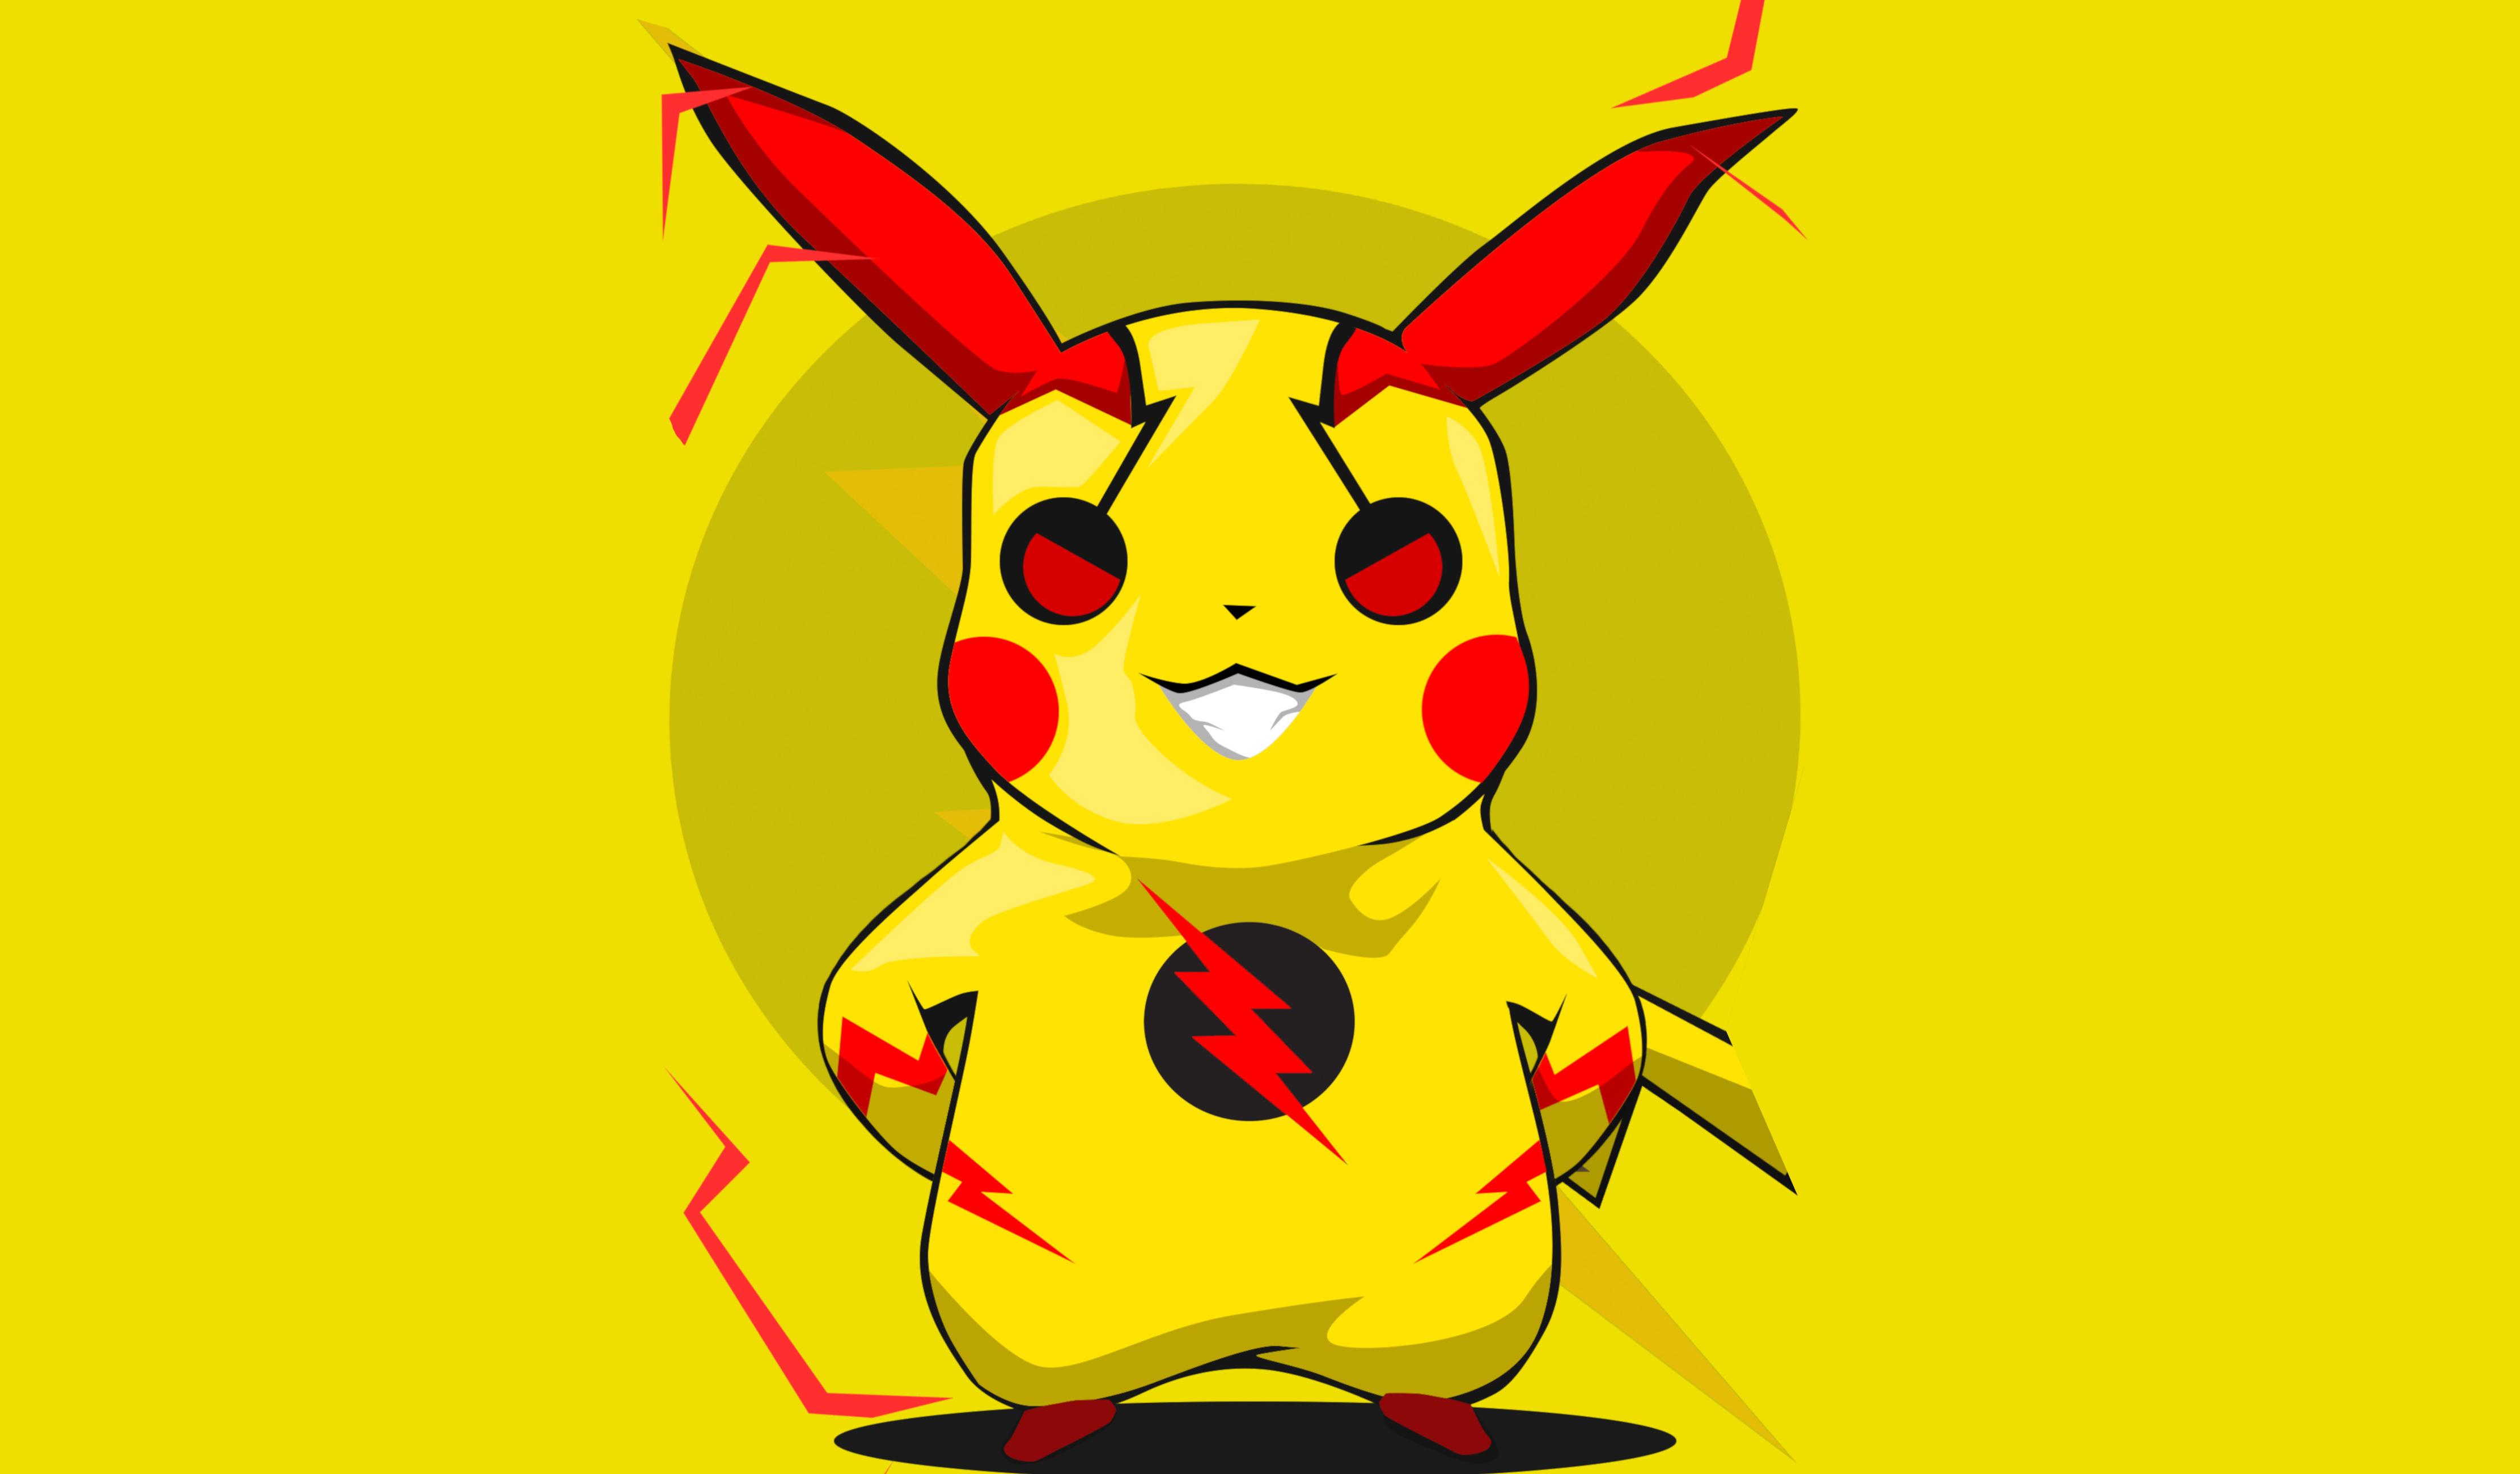 4445 x 2600 · png - Pikachu 4k Ultra HD Wallpaper | Background Image | 4445x2600 | ID ...